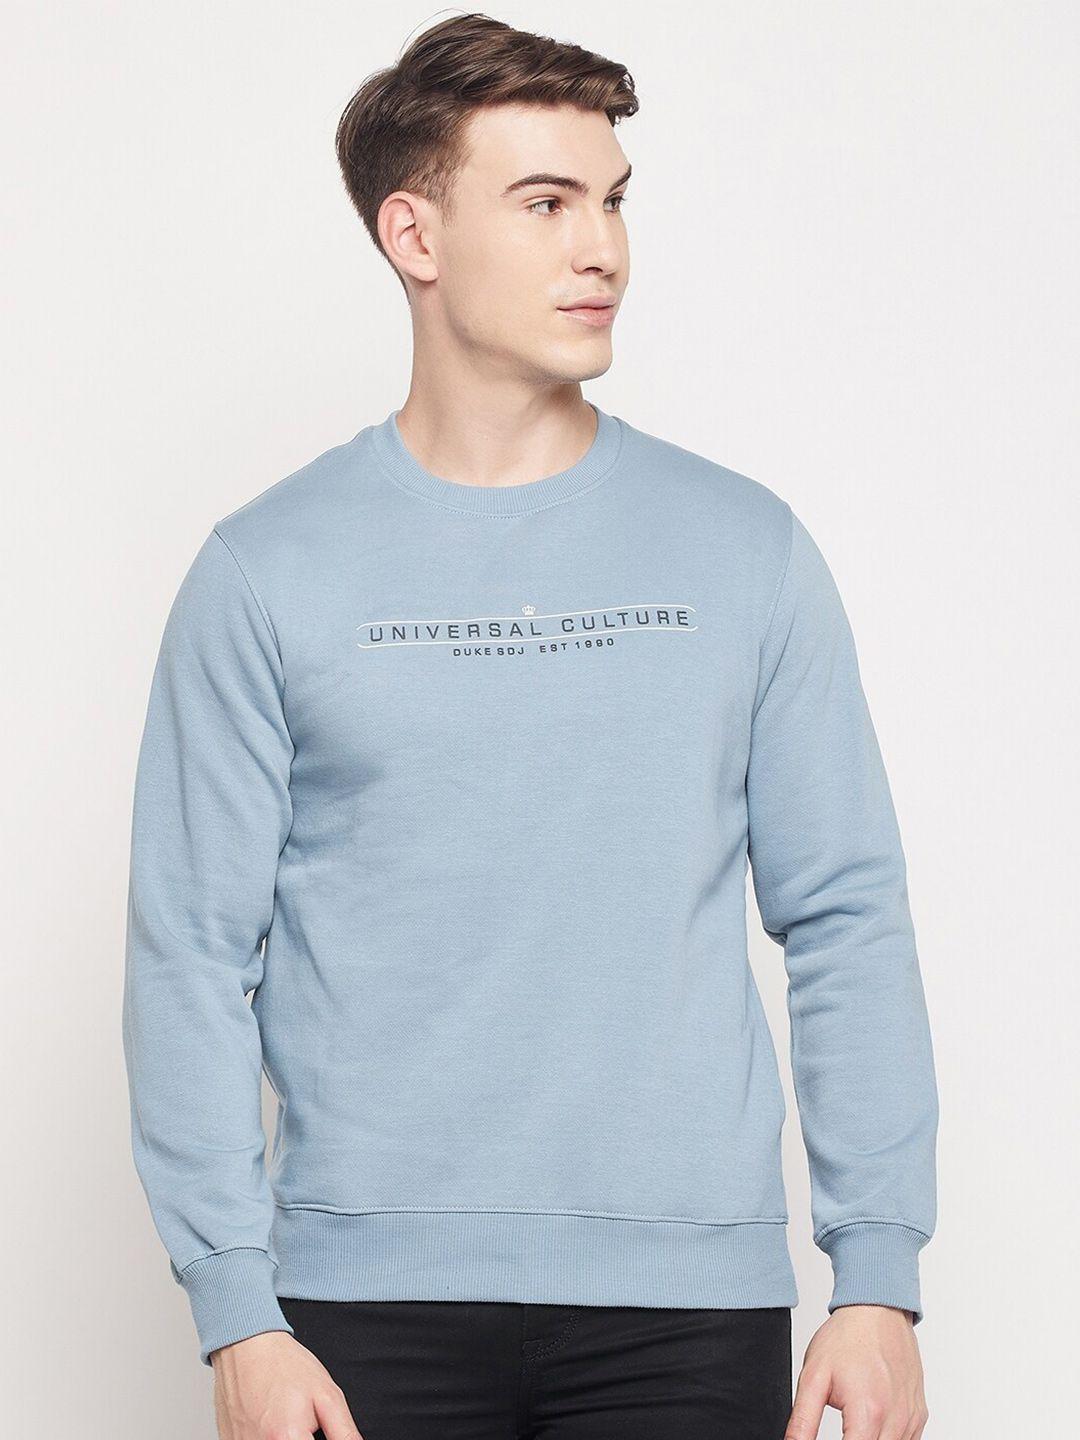 duke-men-blue-sweatshirt